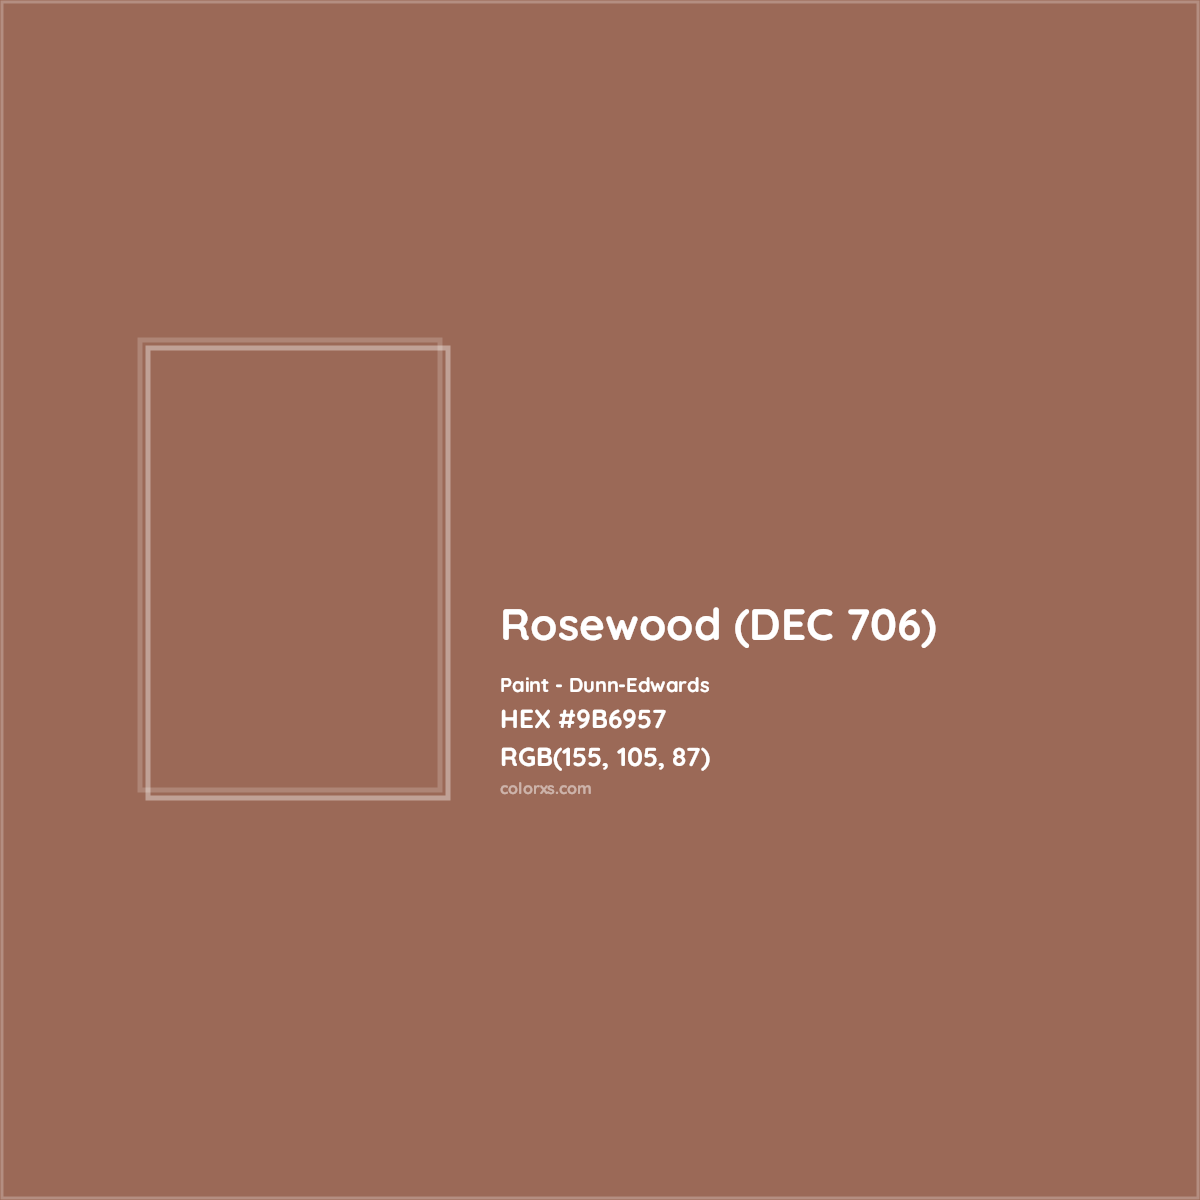 HEX #9B6957 Rosewood (DEC 706) Paint Dunn-Edwards - Color Code